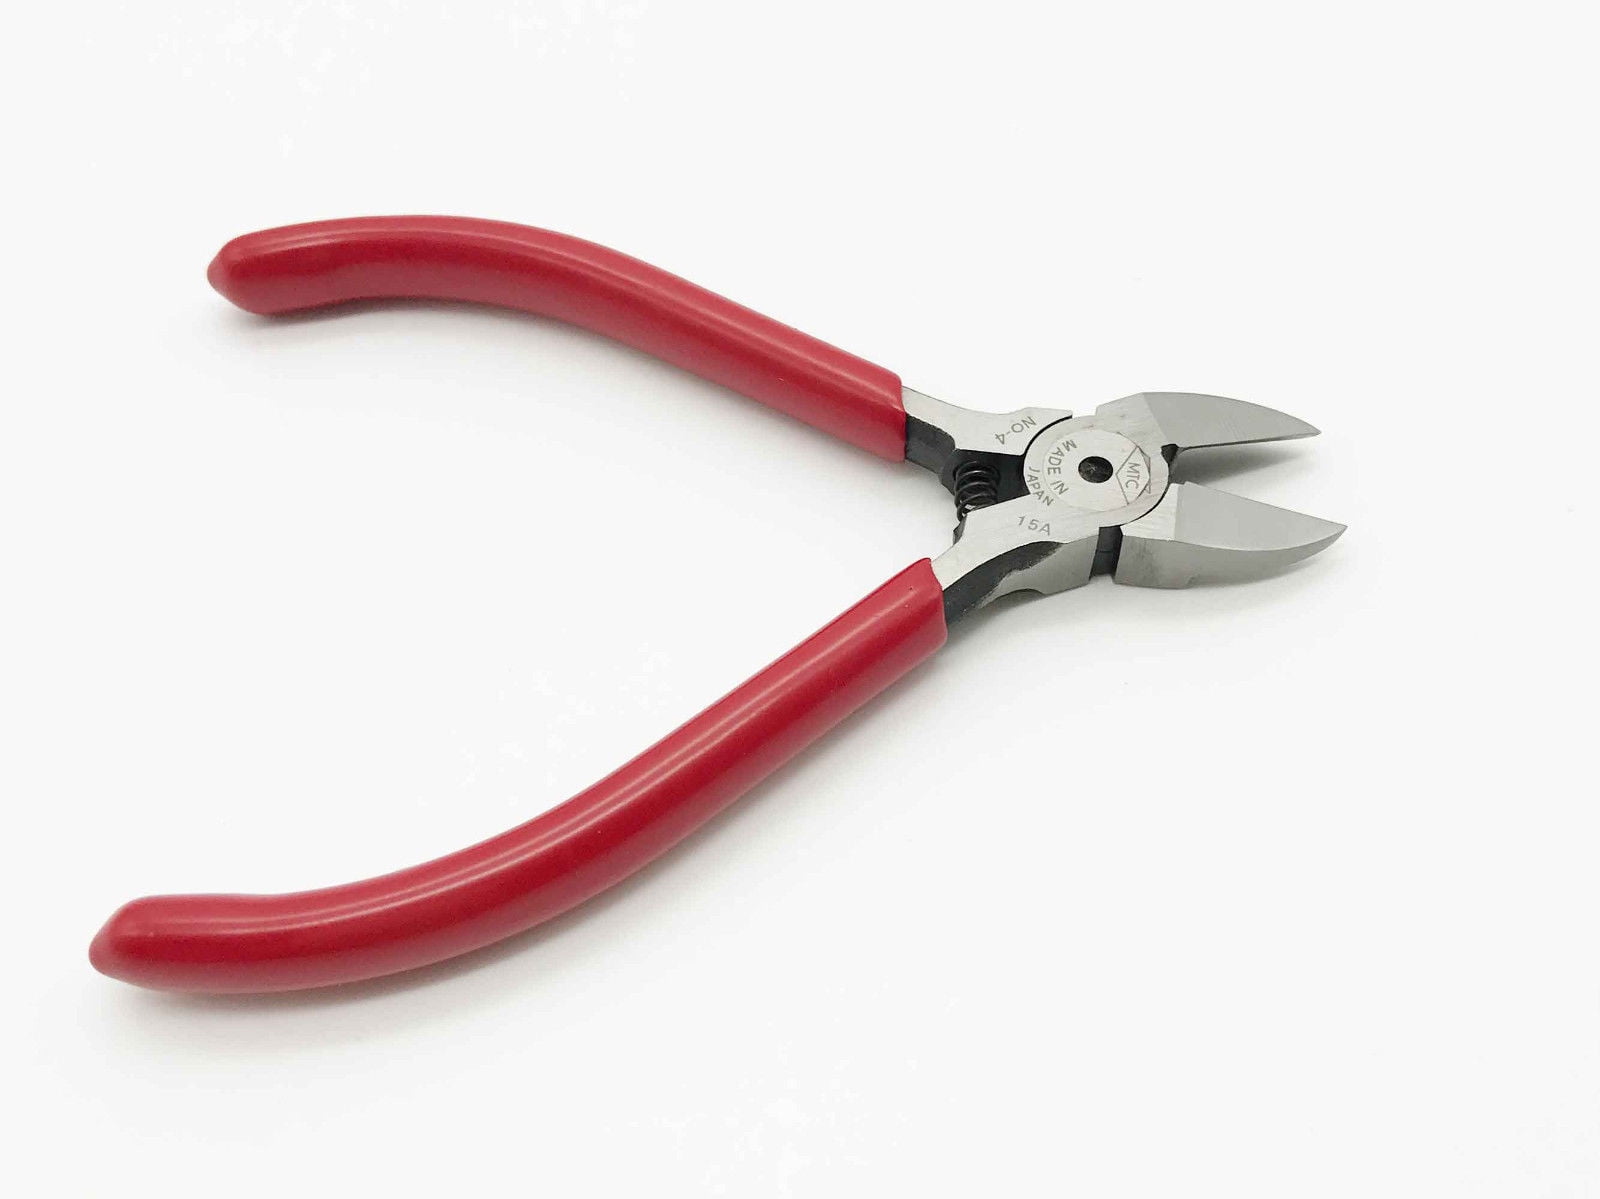 Nippers Repair Hand Tool Diagonal Cutting Pliers Wire Cutter Shears Plier LT